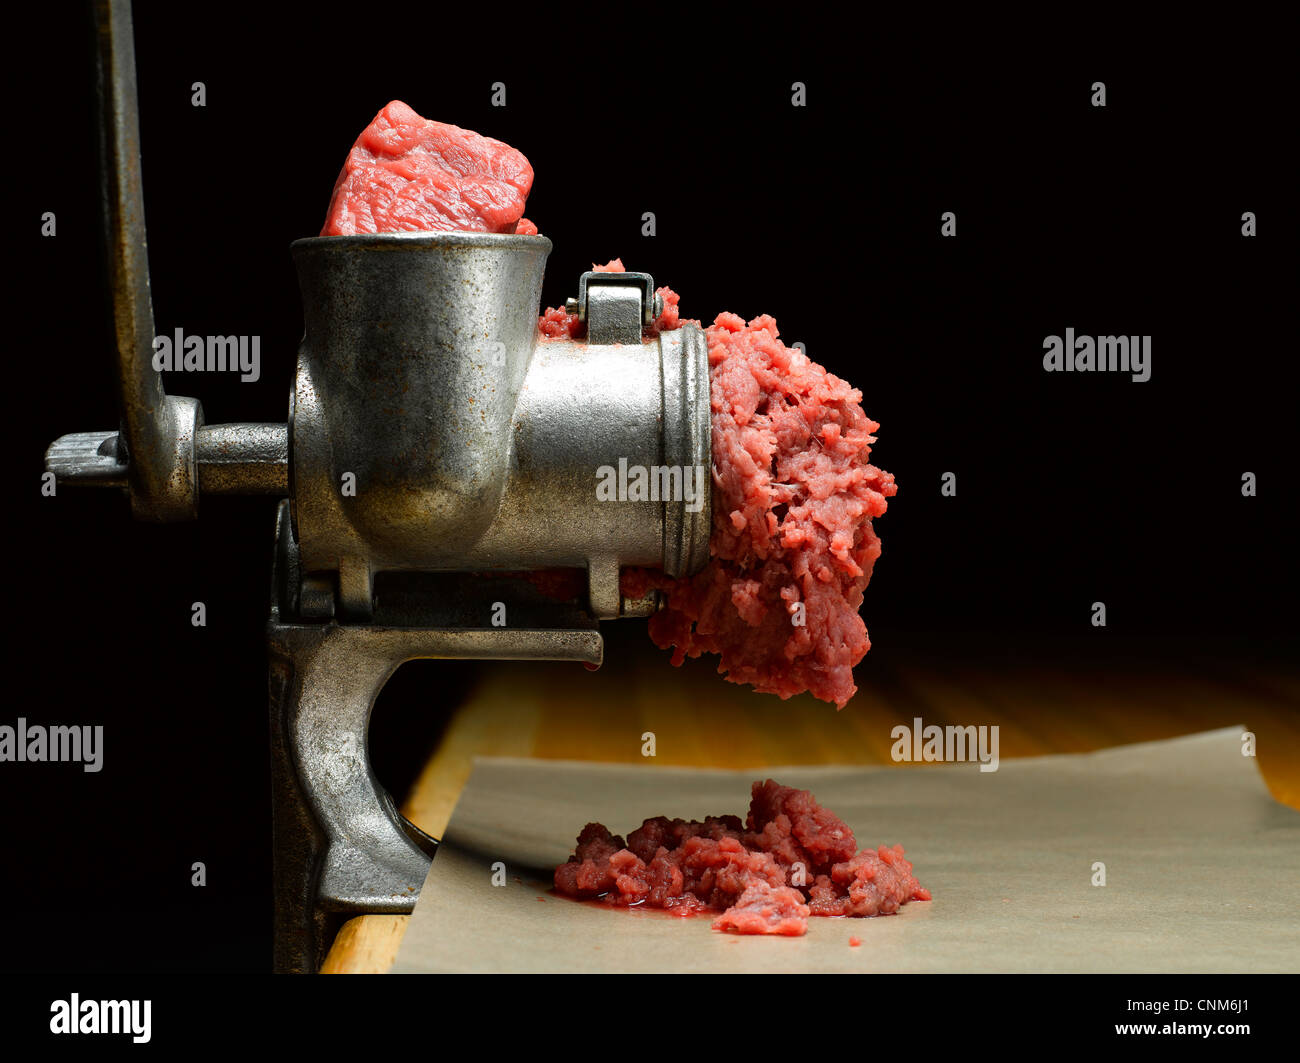 Minced Meat Meat Grinder Stock Photo by ©elizalebedewa 277588970